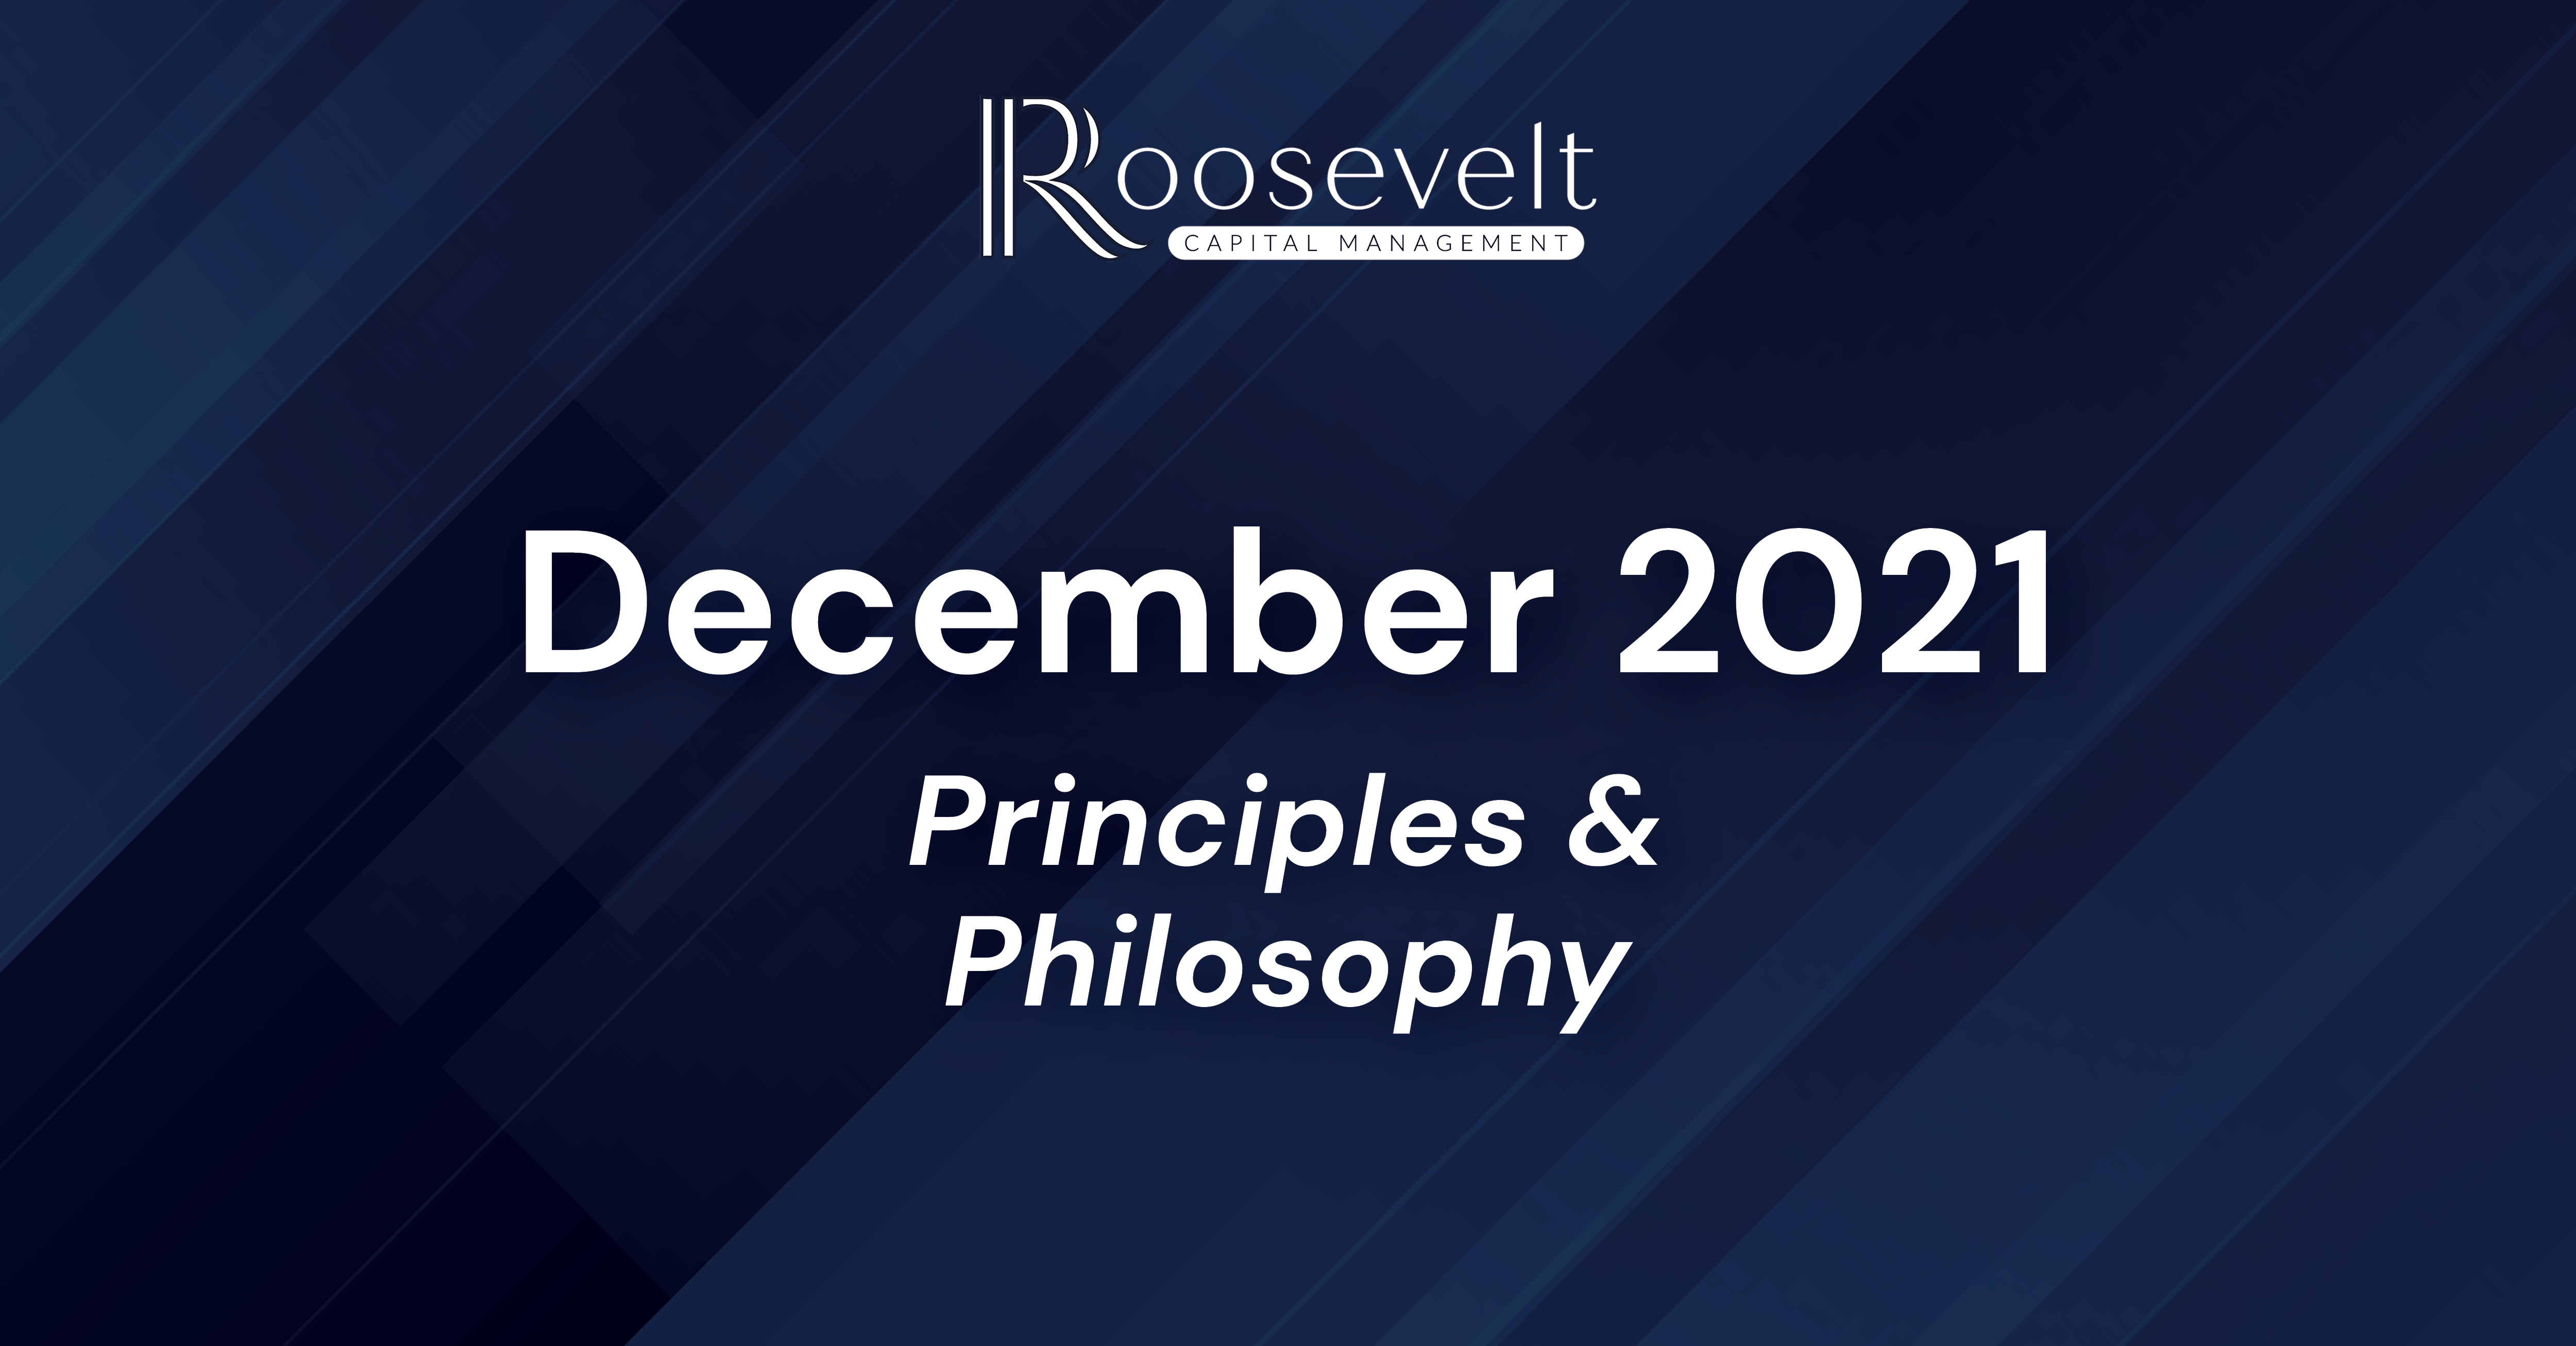 December 2021 - Principles & Philosophy